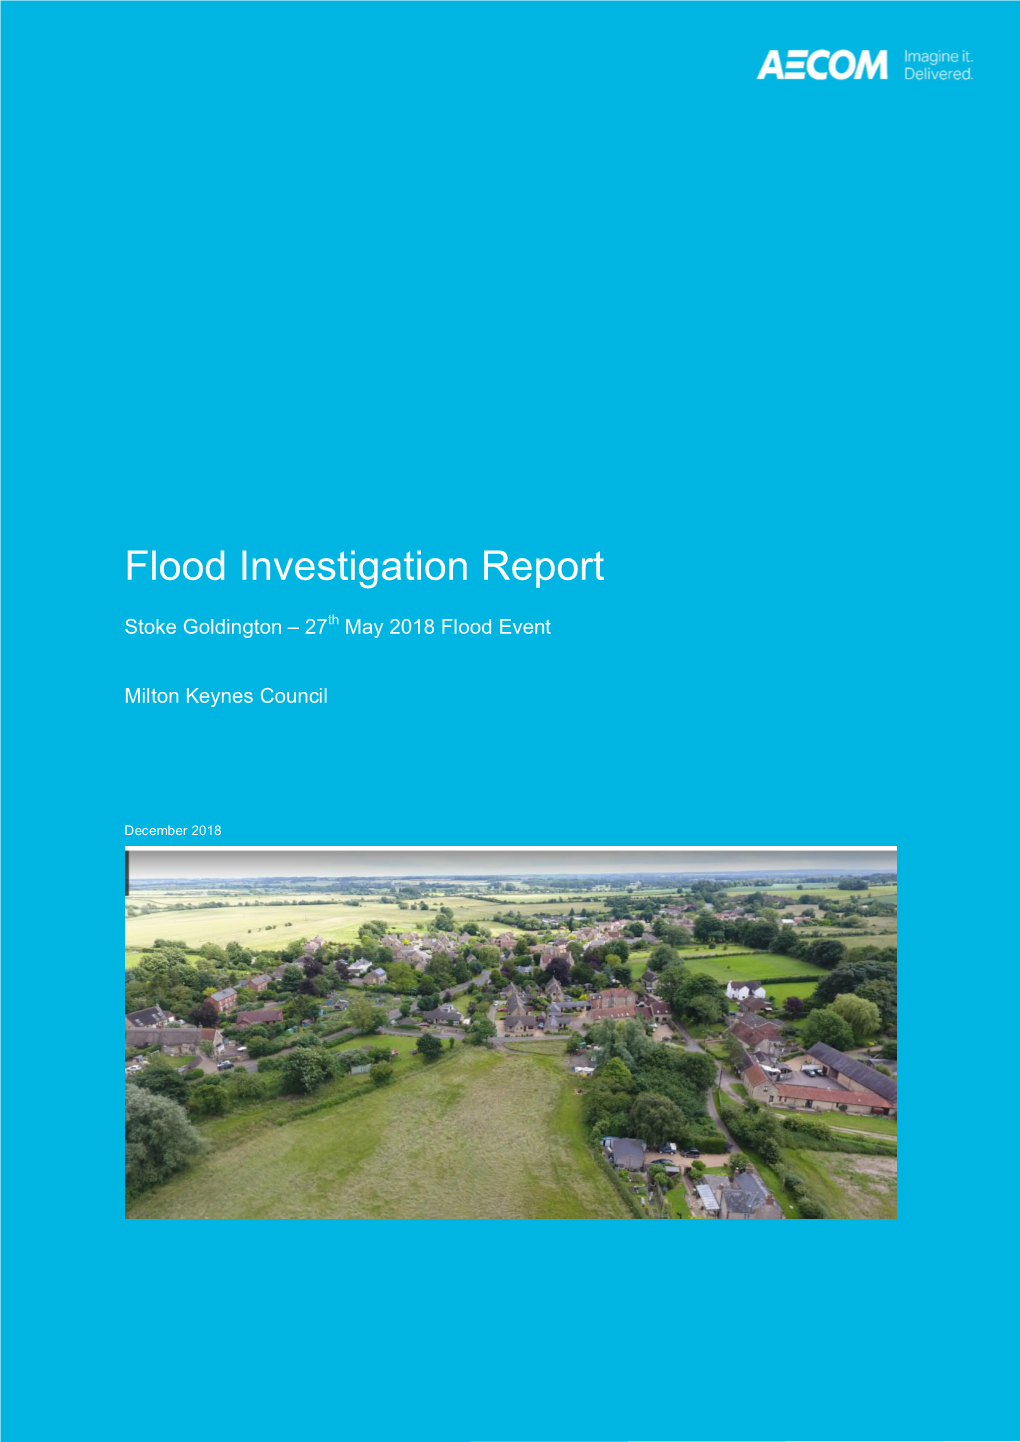 Stoke Goldington Flood Investigation Report December 2018